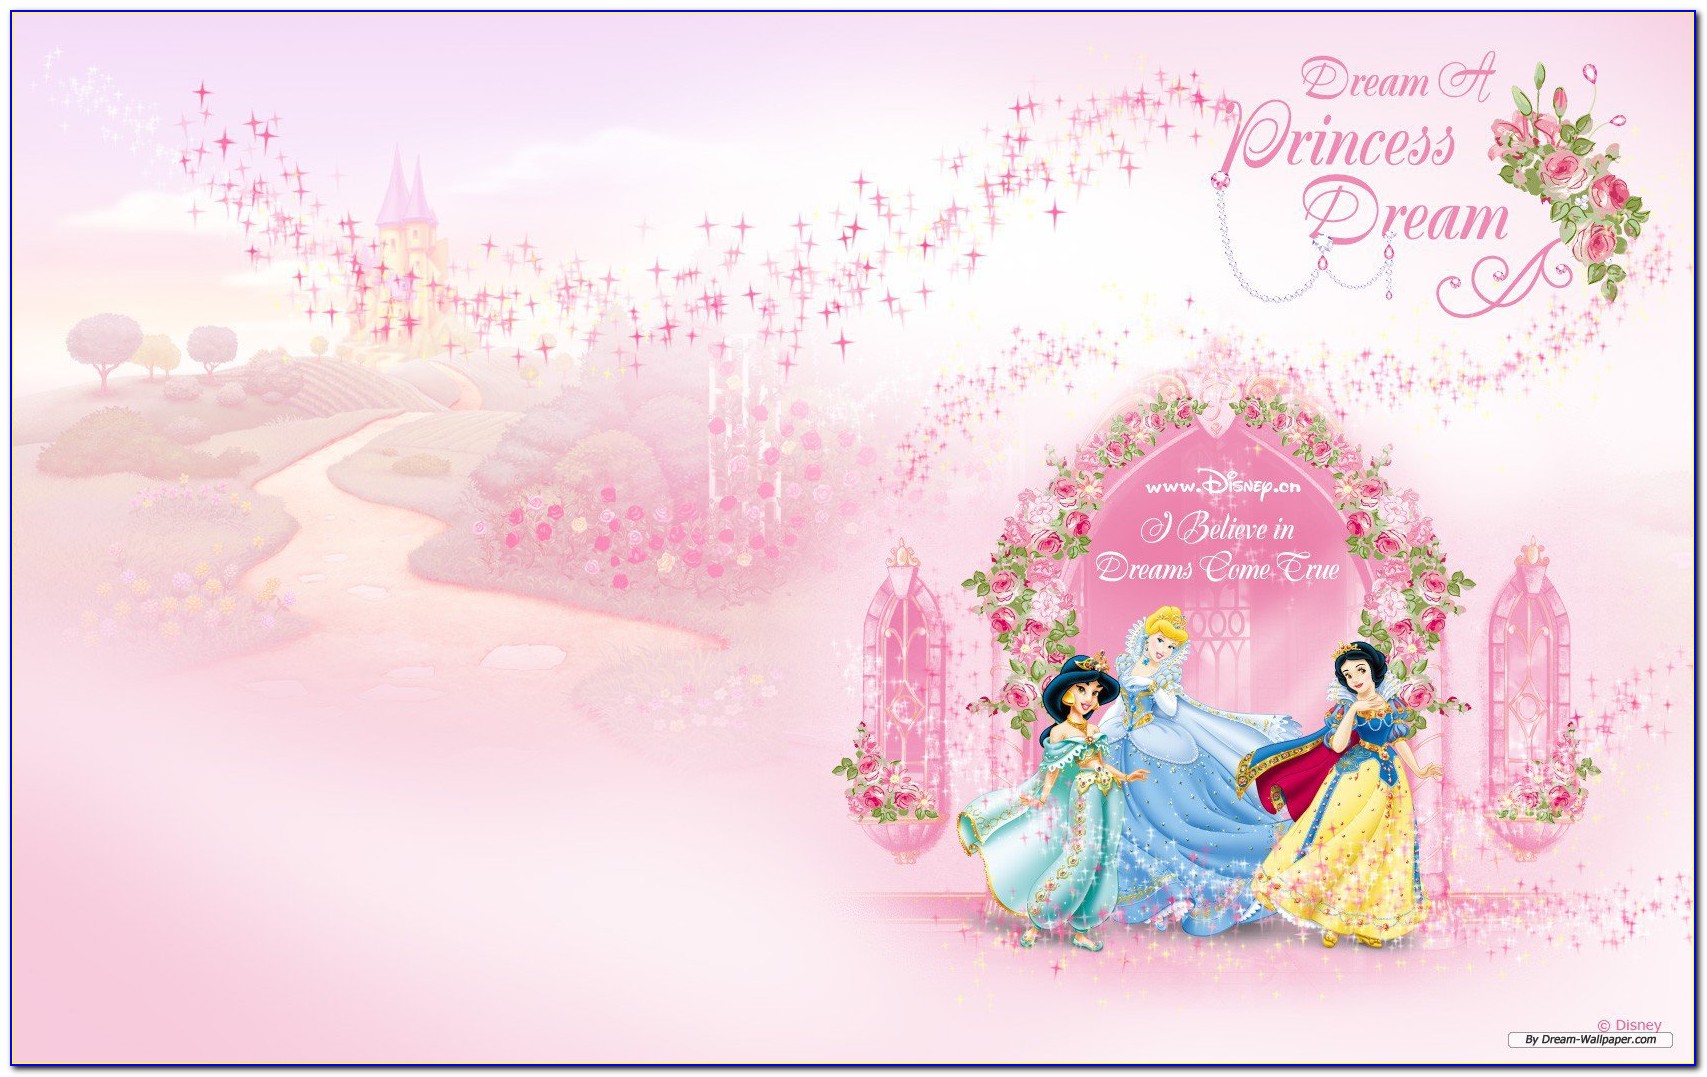 Disney Princess Invitations Templates